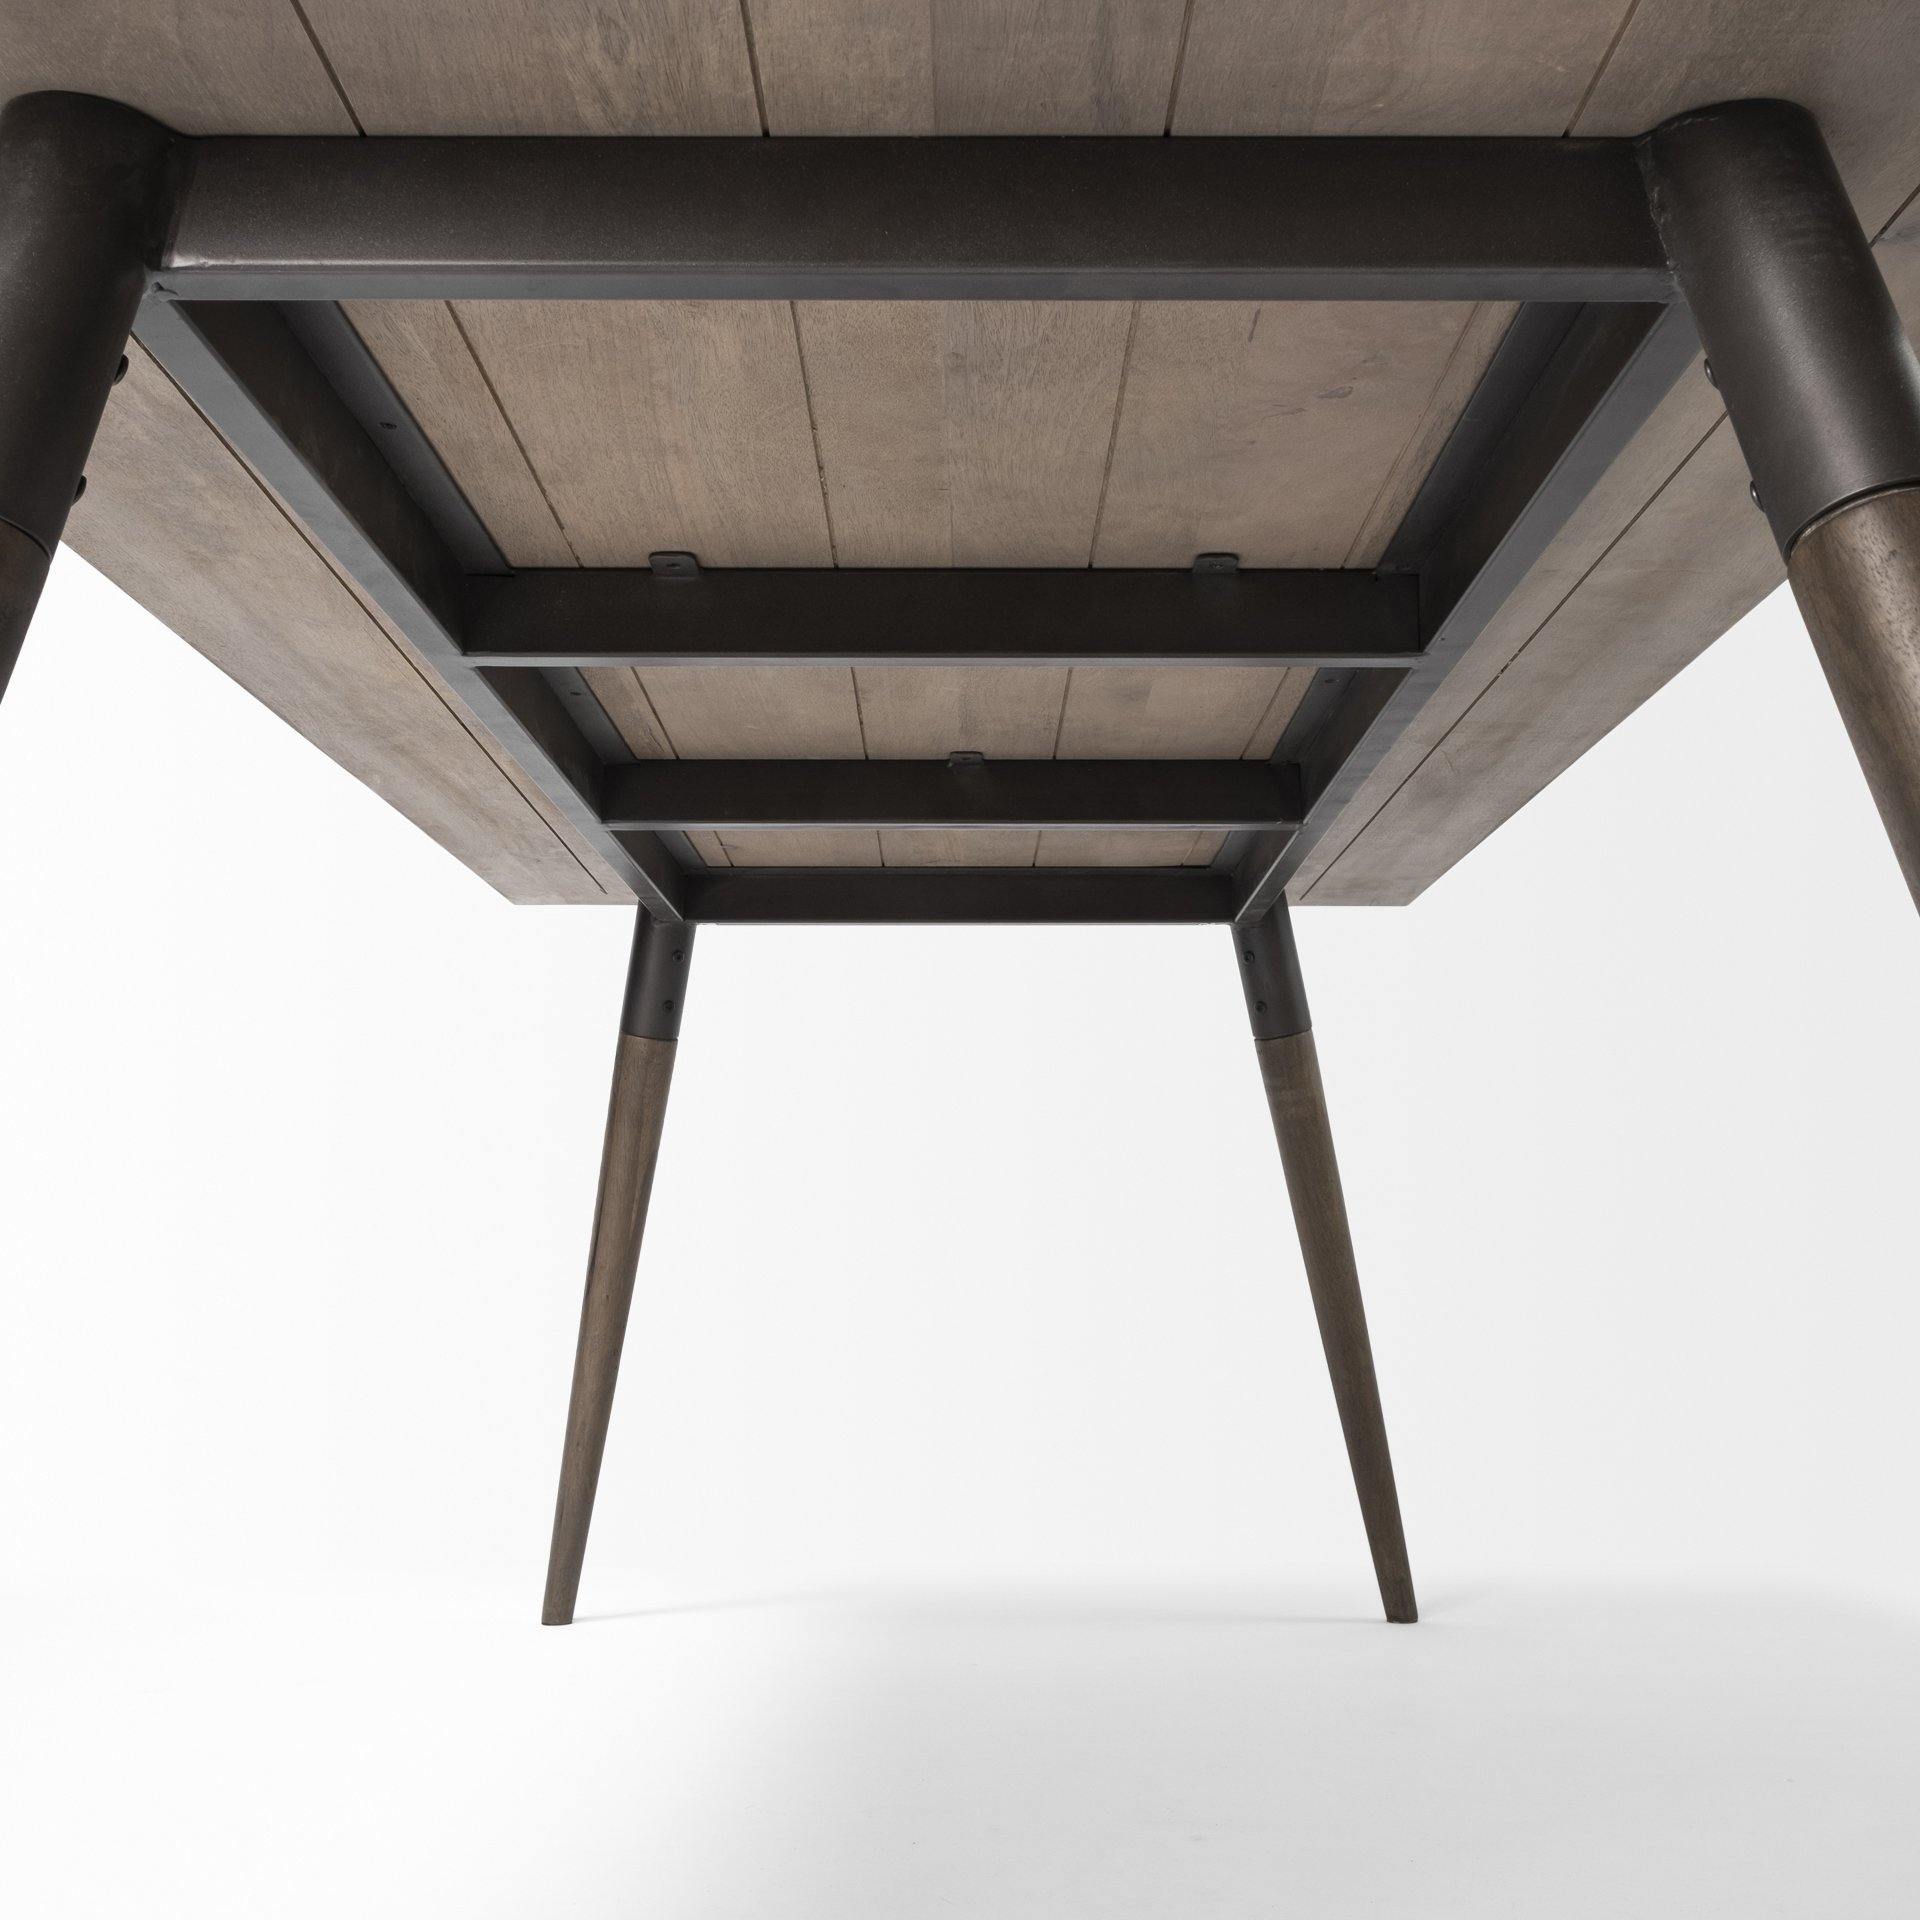 Nicholas Dining Table - Reimagine Designs - dining table